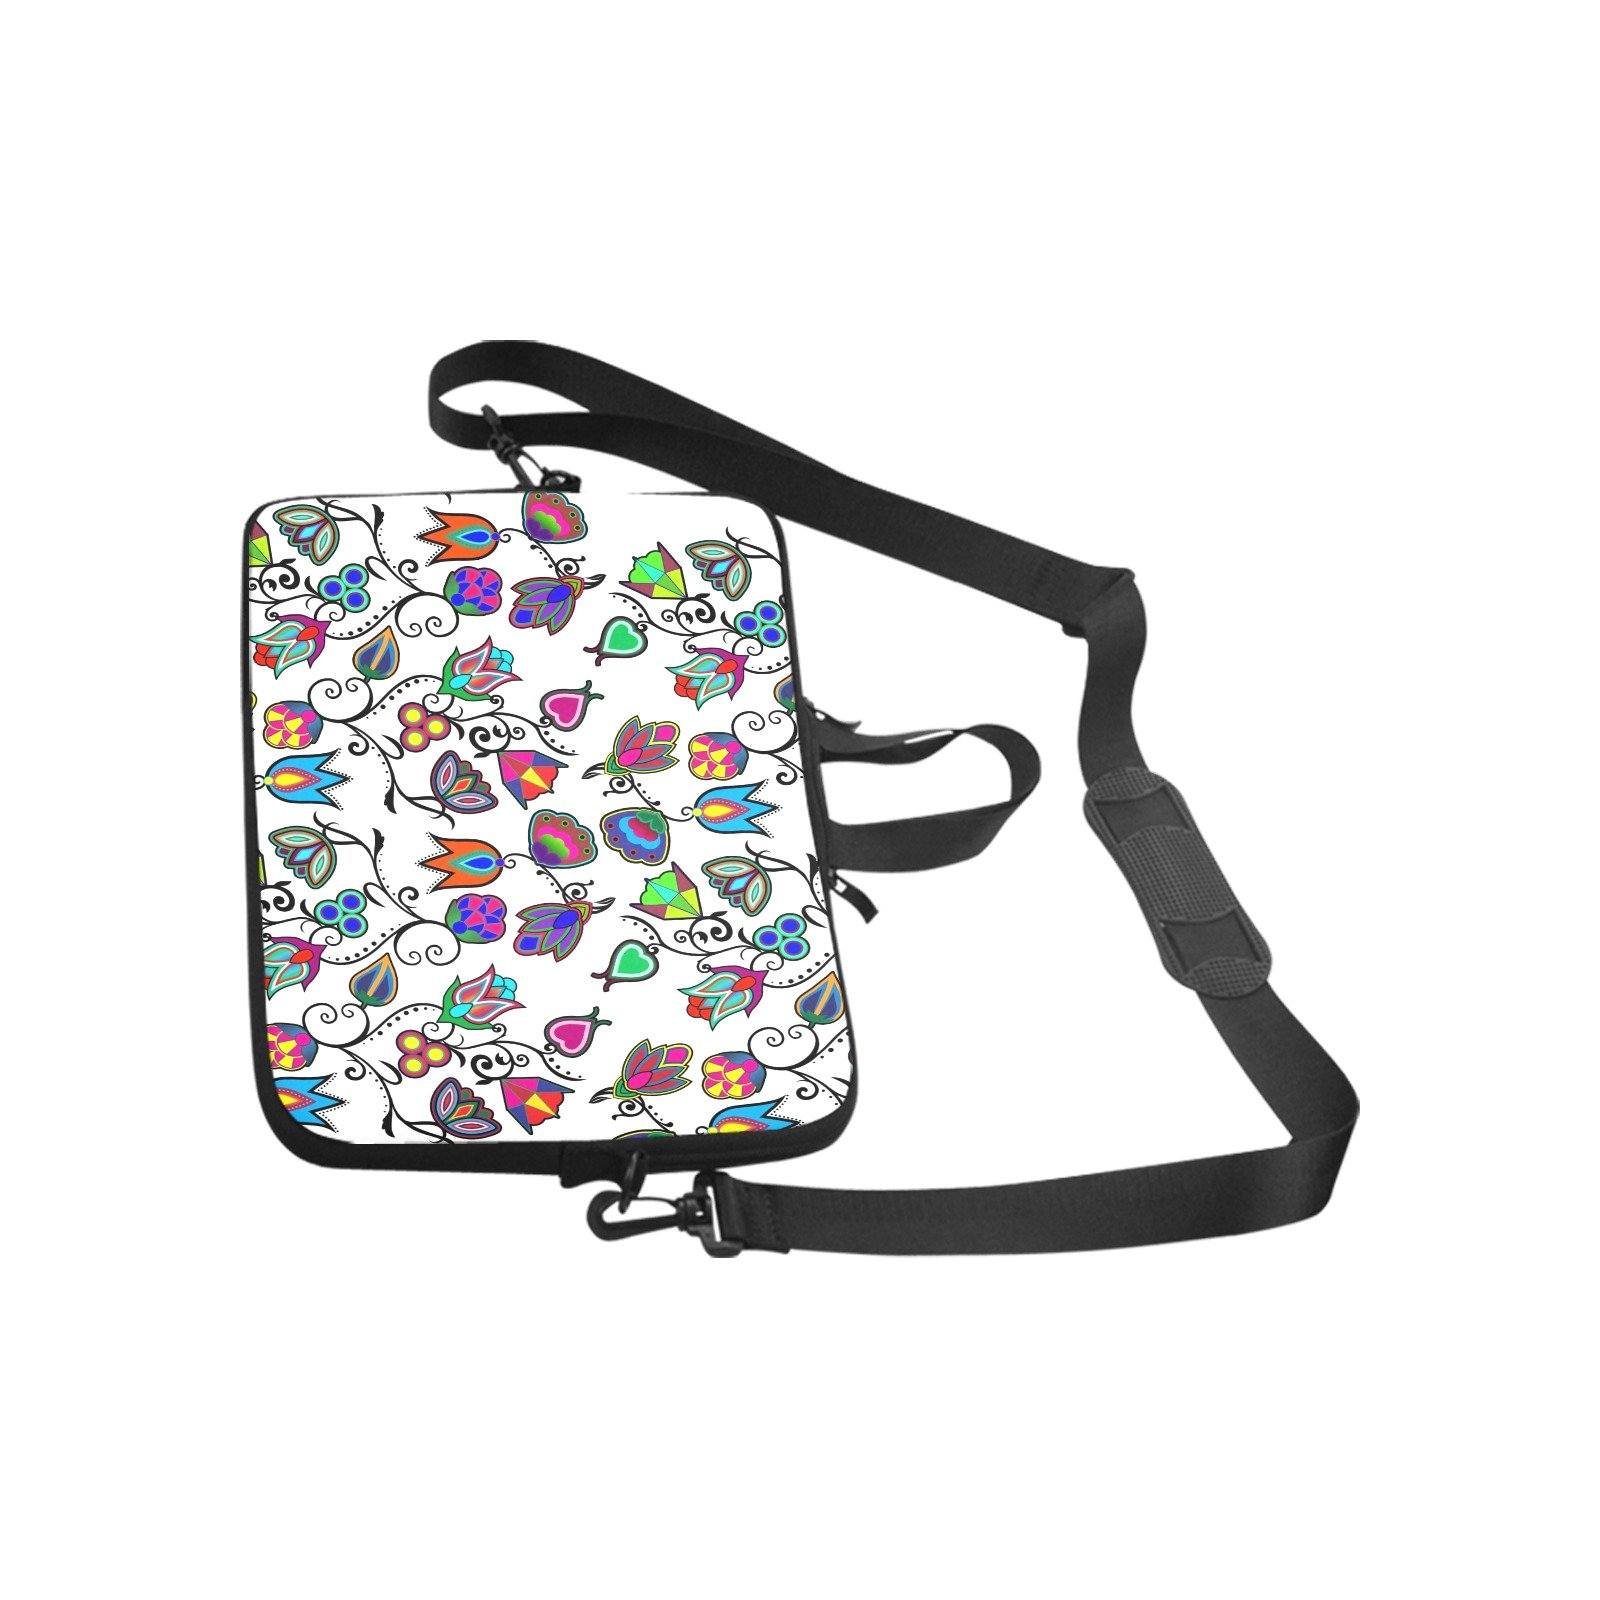 Indigenous Paisley White Laptop Handbags 17" bag e-joyer 